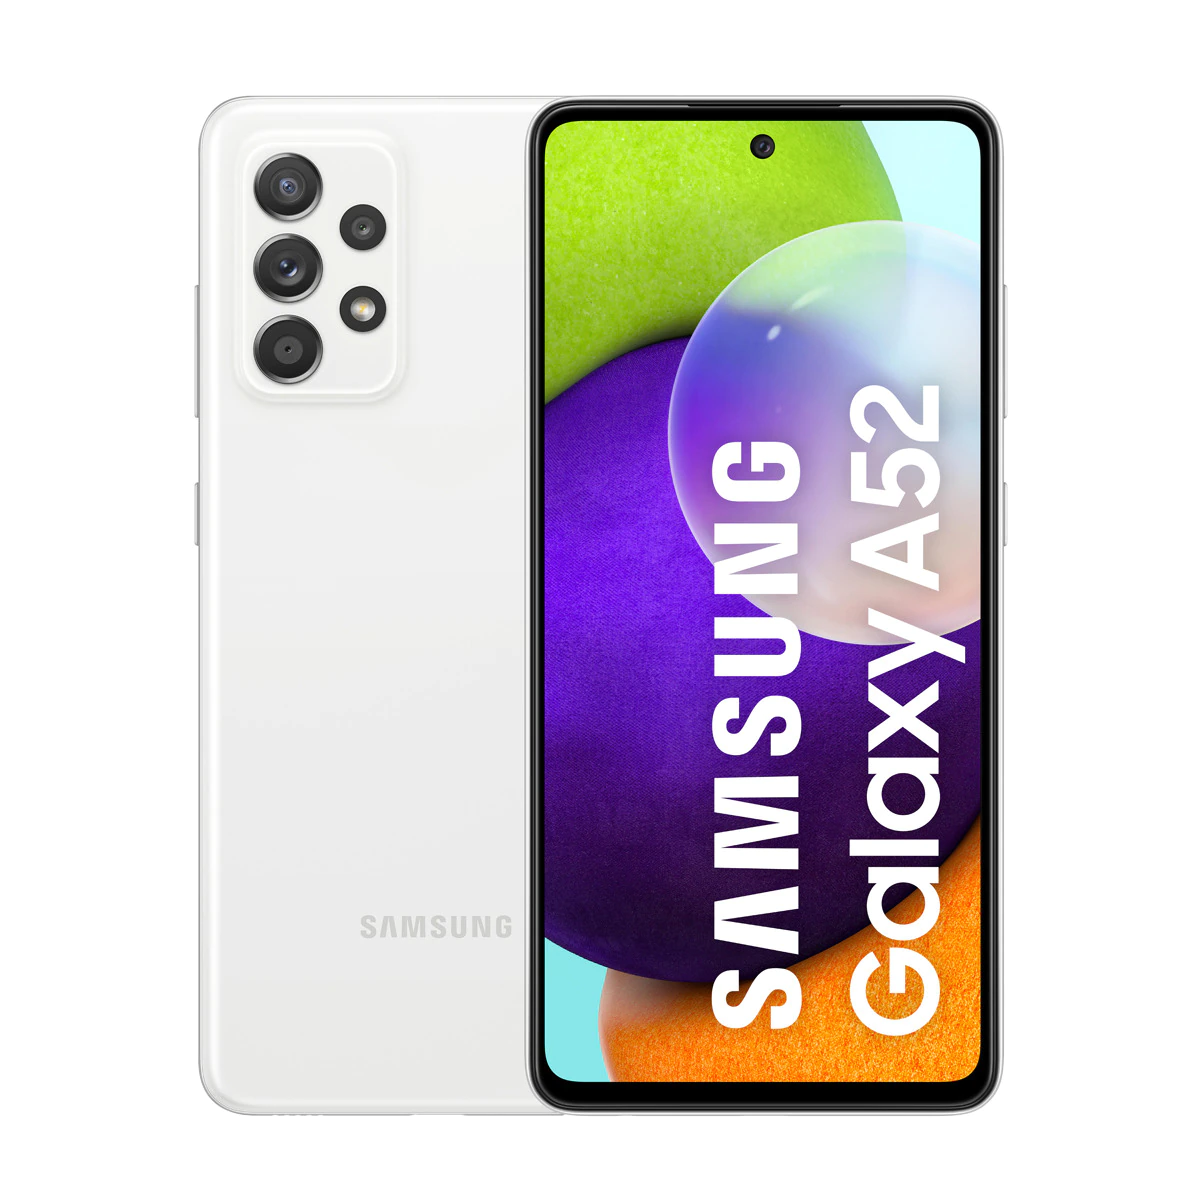 Samsung Galaxy A52 6 GB + 128 GB blanco móvil libre